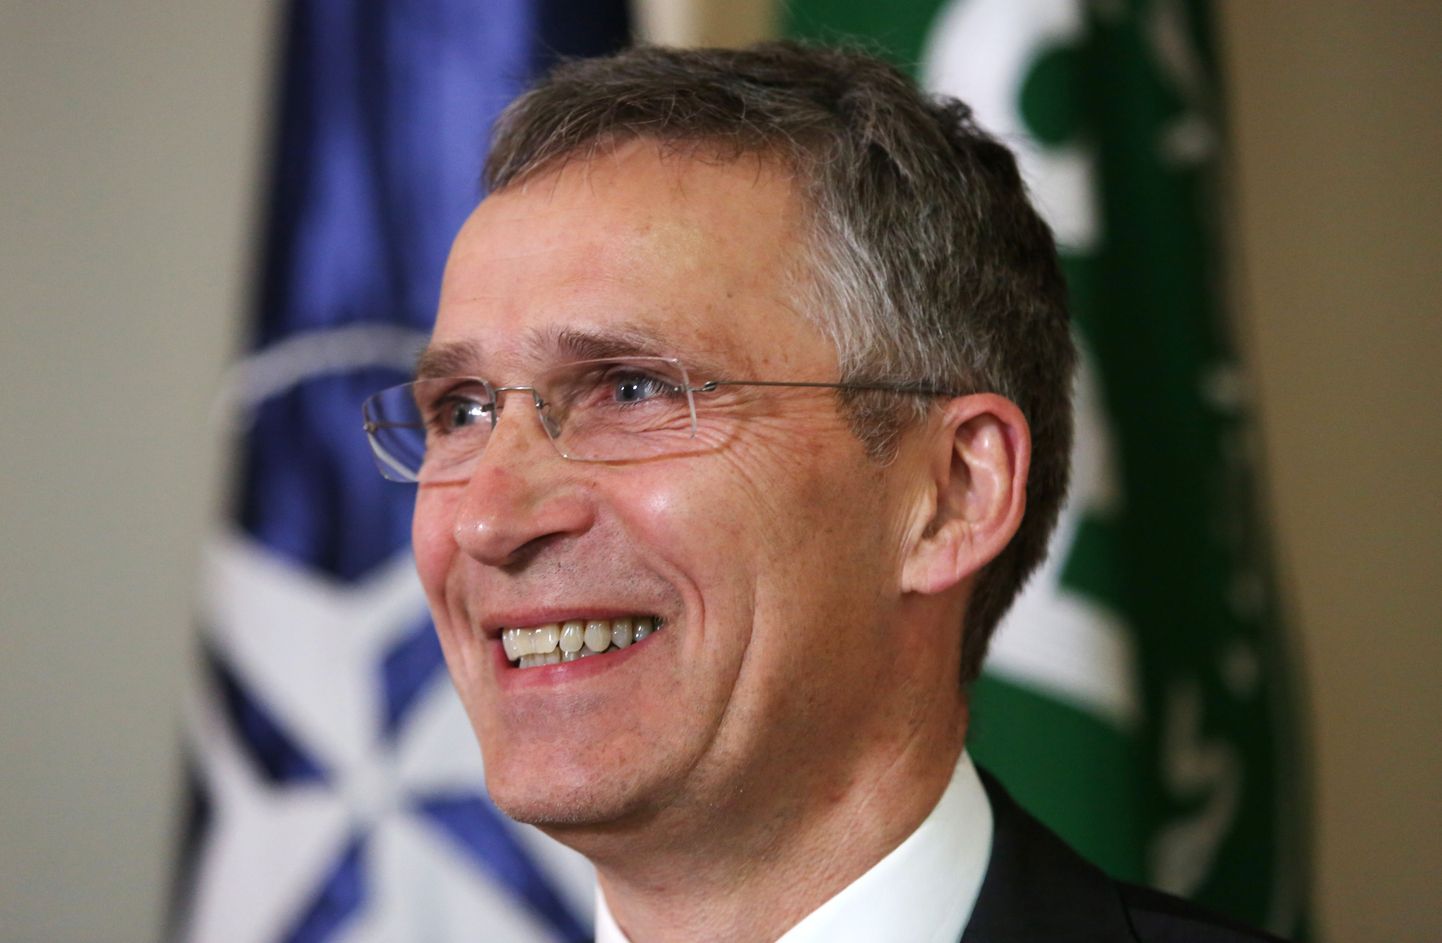 NATO peasekretär Jens Stoltenberg